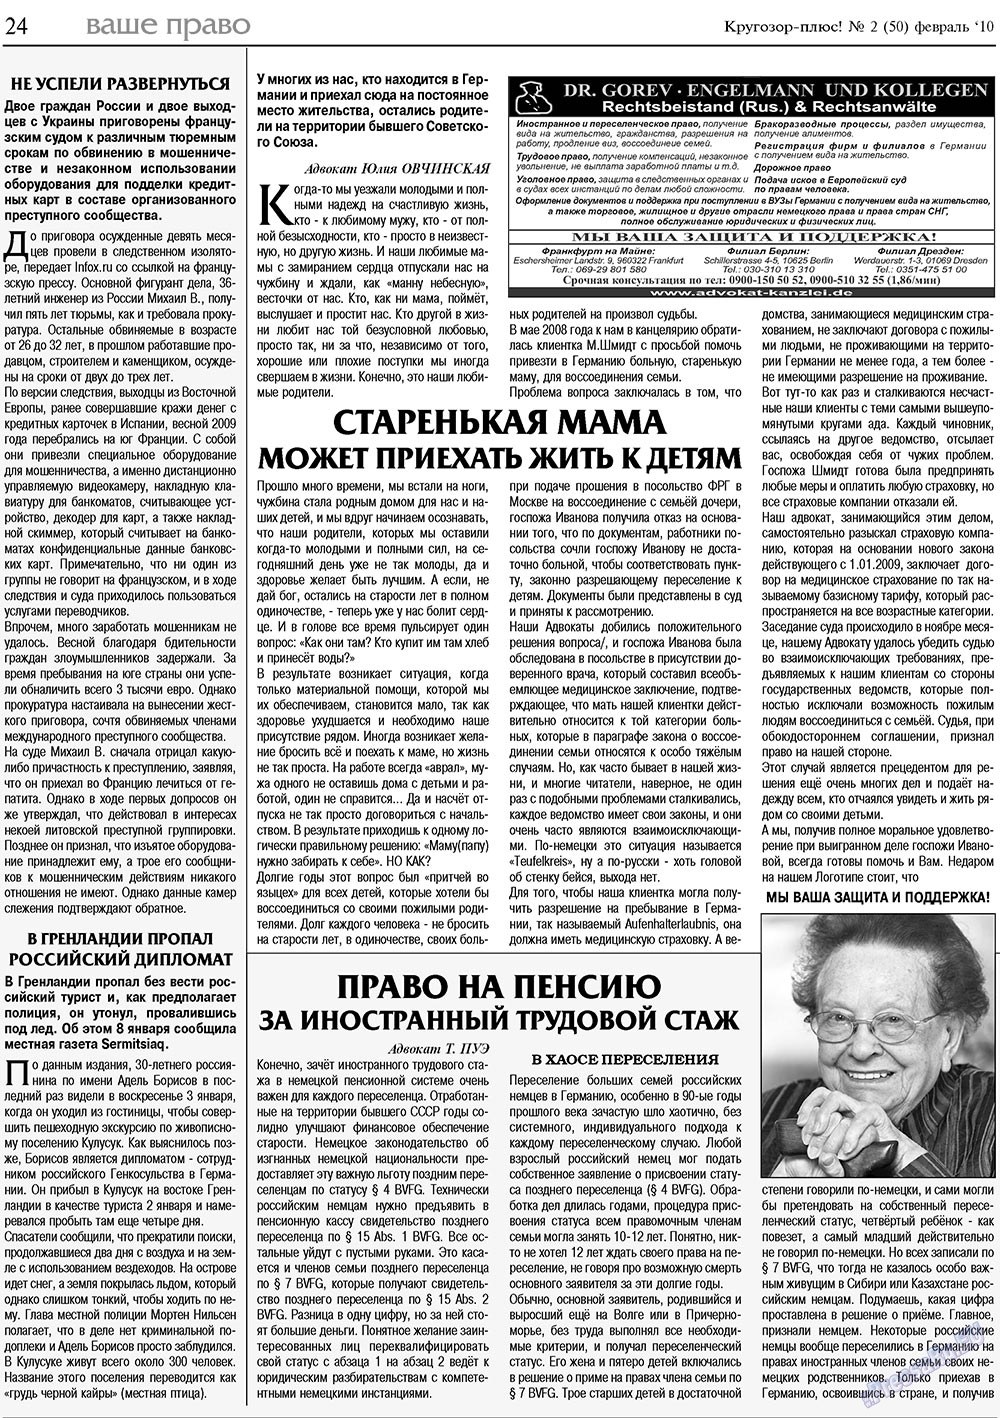 Кругозор плюс! (газета). 2010 год, номер 2, стр. 24